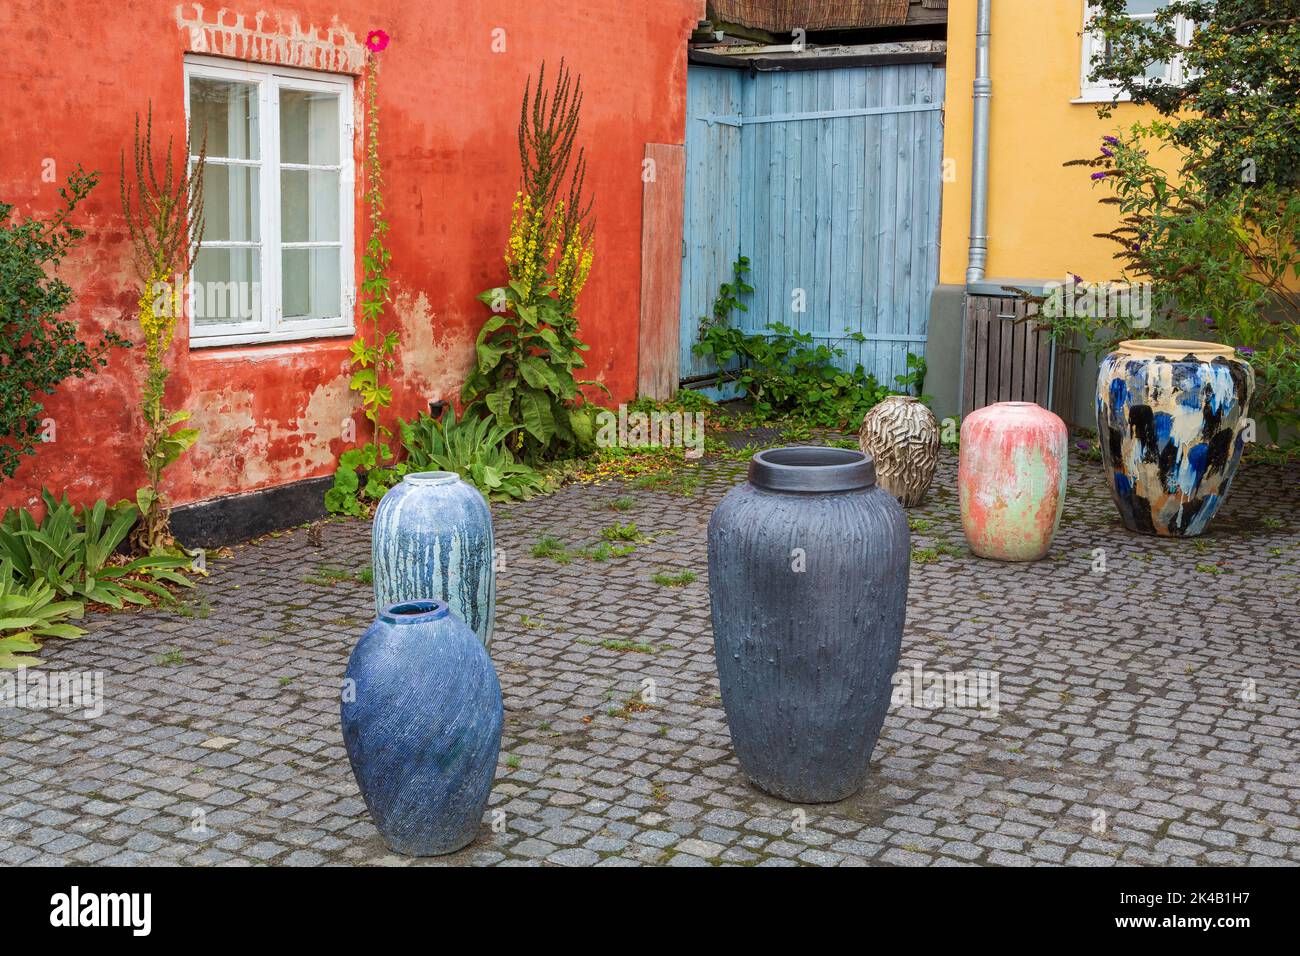 Gallery in Ronne,Bornholm Island, Denmark, Europe Stock Photo